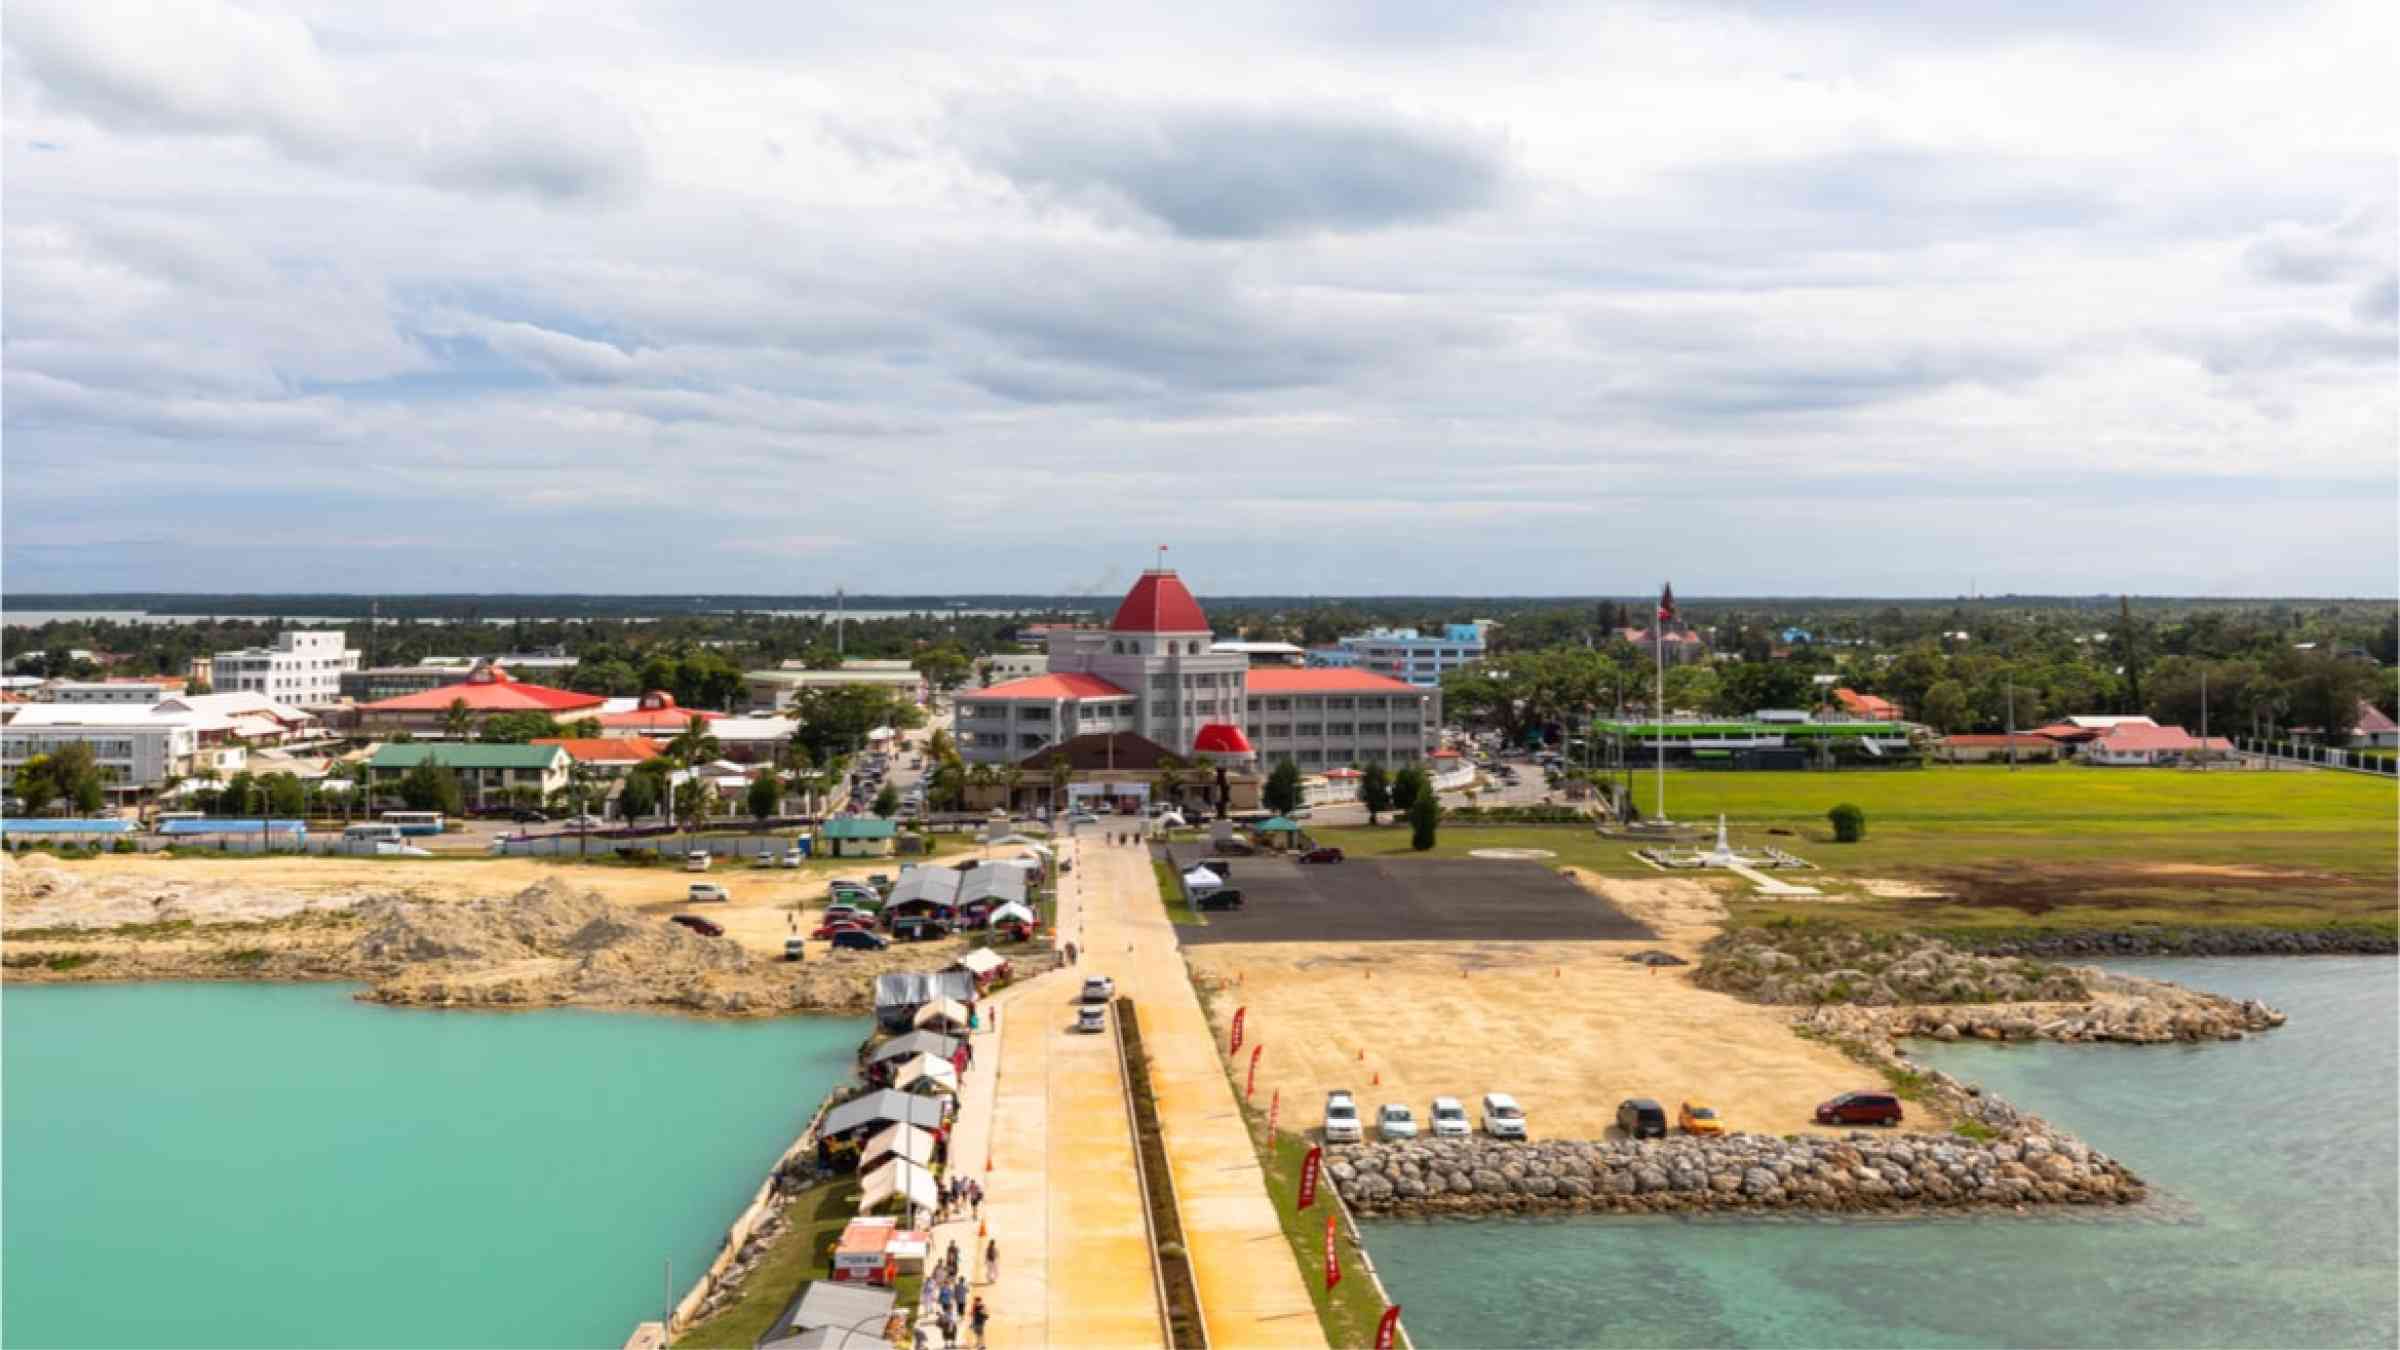 The city of Nukualofa in Tonga.